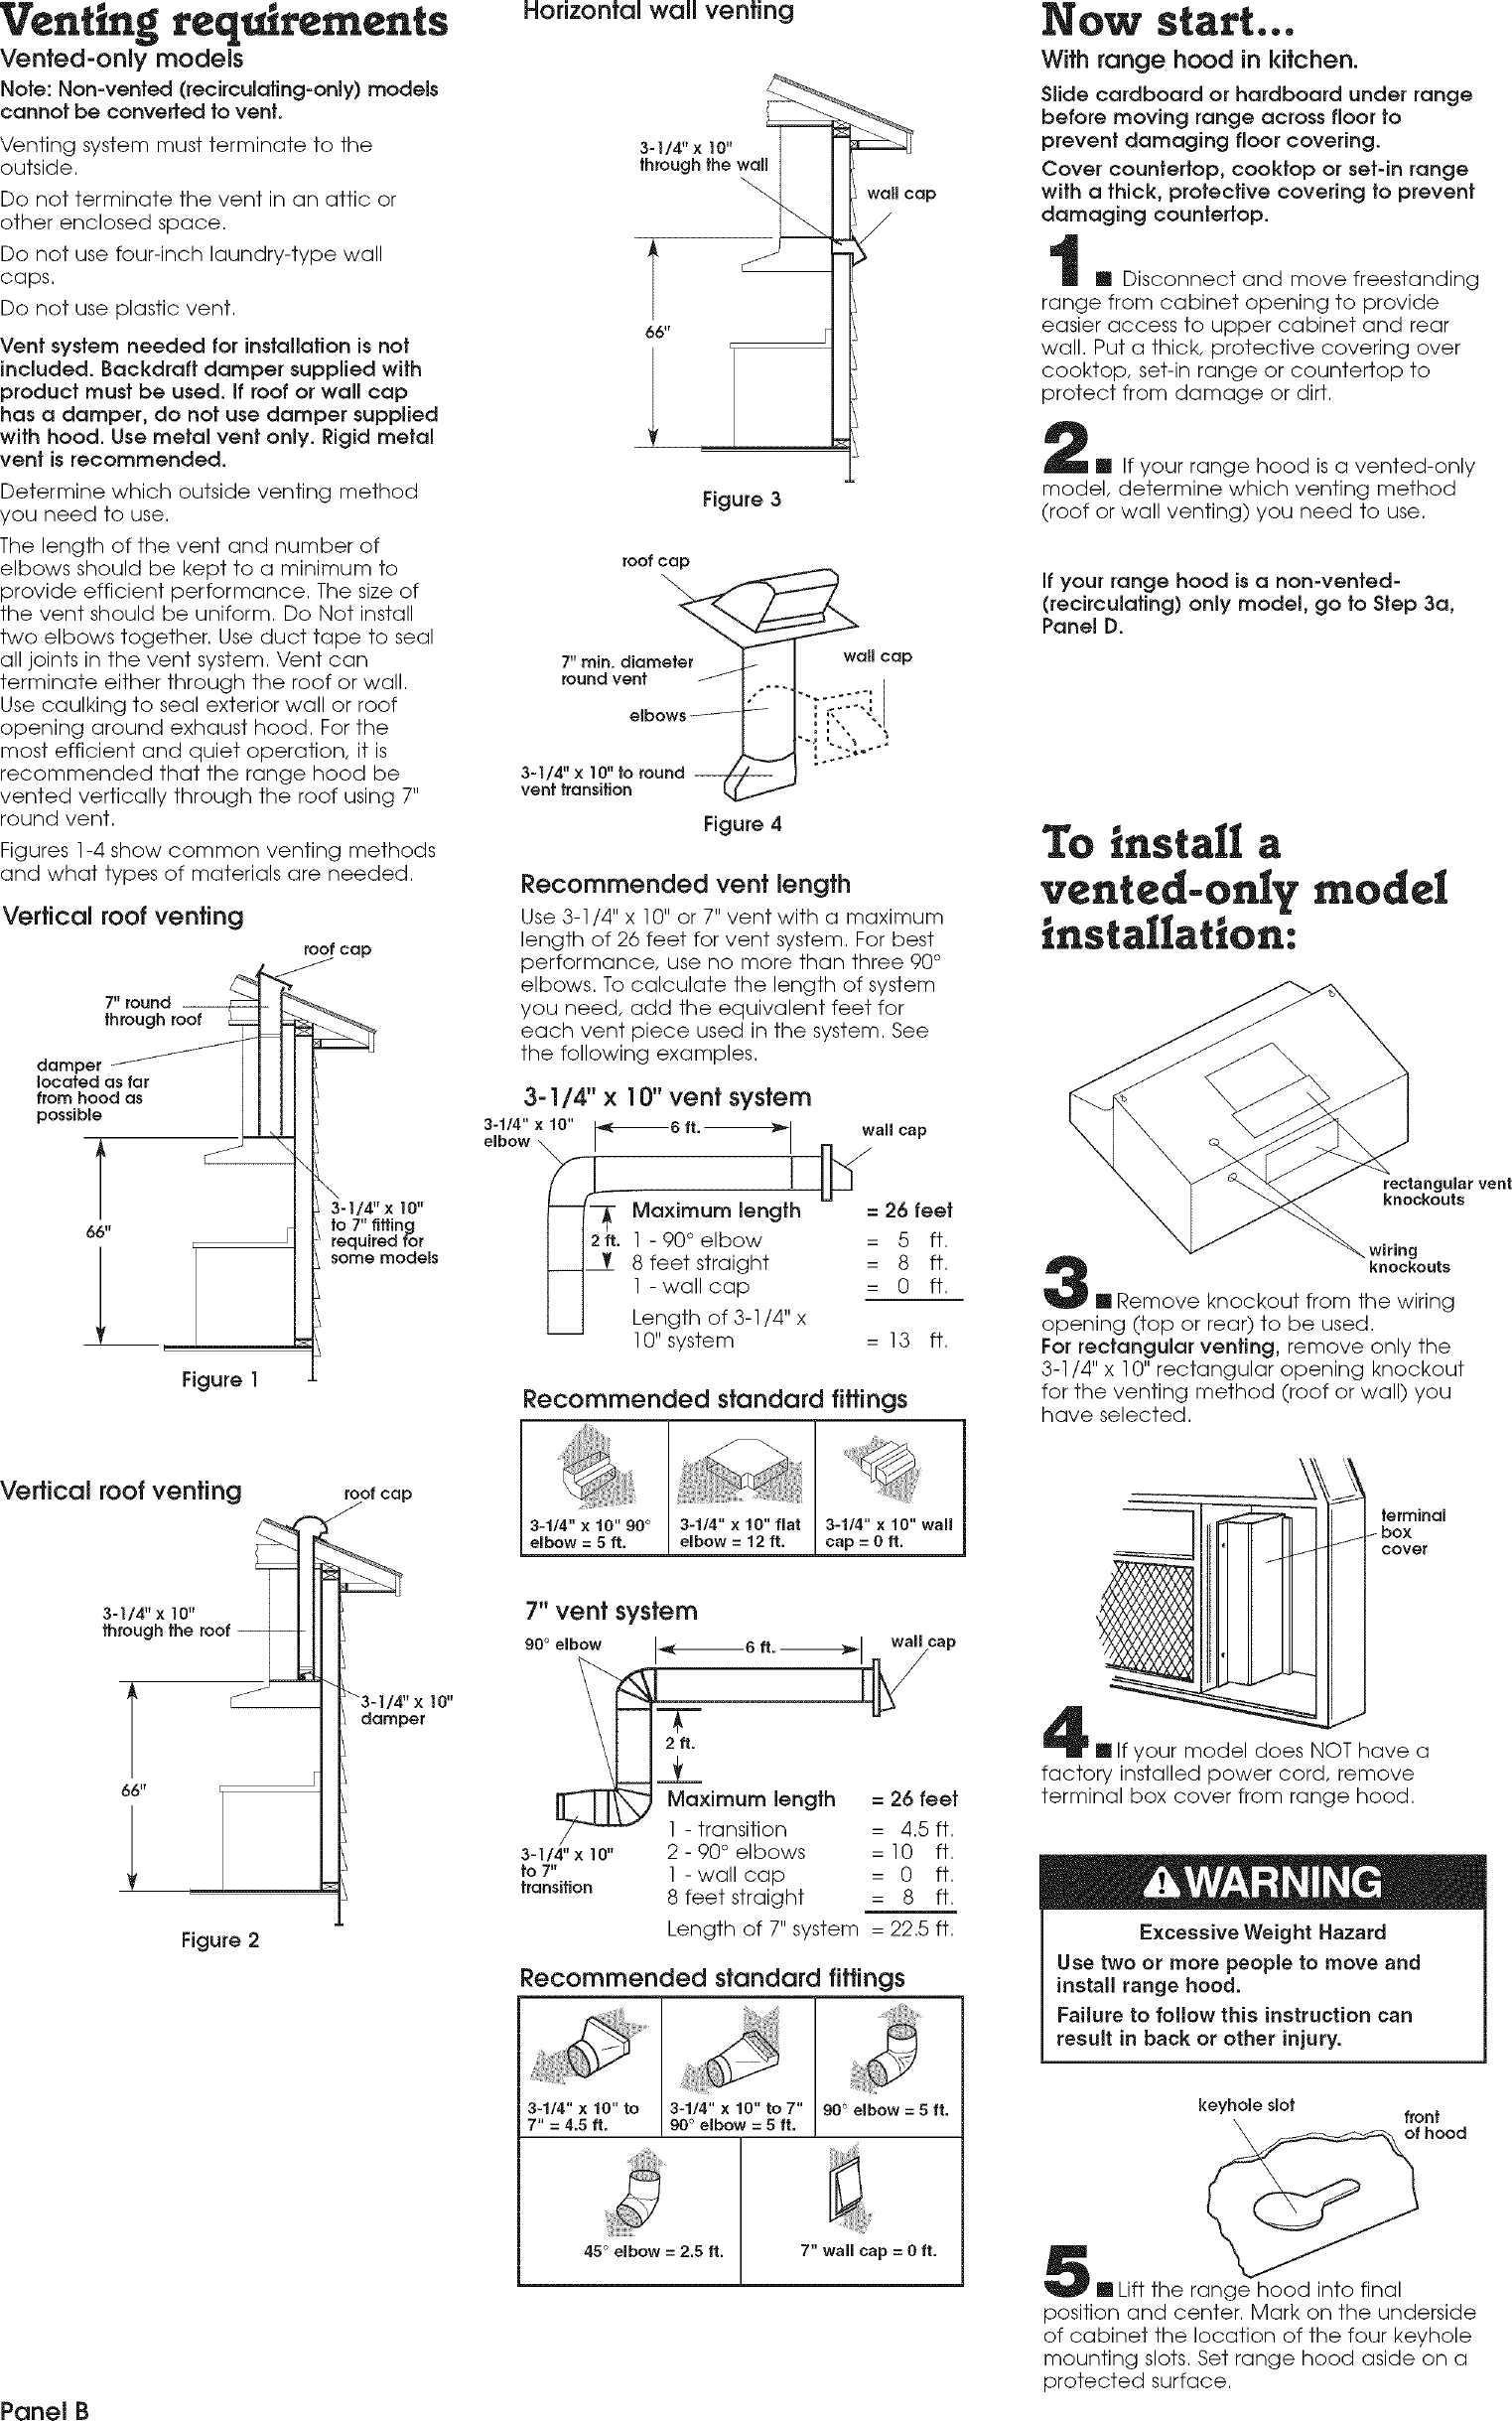 Page 3 of 7 - WHIRLPOOL  Range Hood Manual L0604813